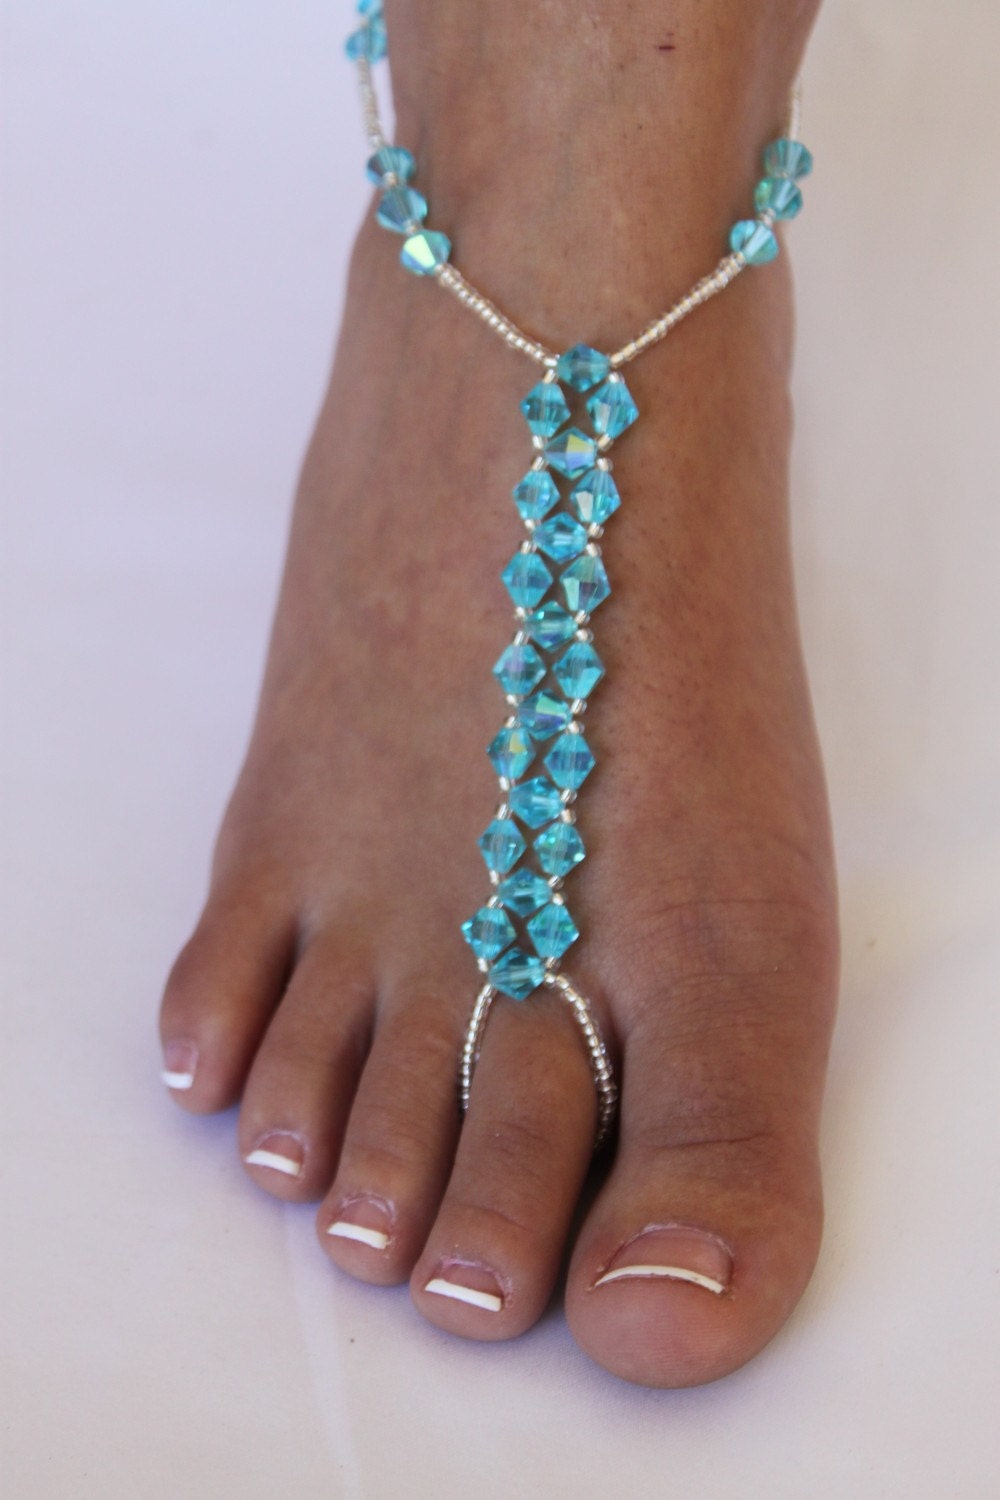 Barefoot Sandals Bridal Crystal Beach Wedding Foot By Abiddabling